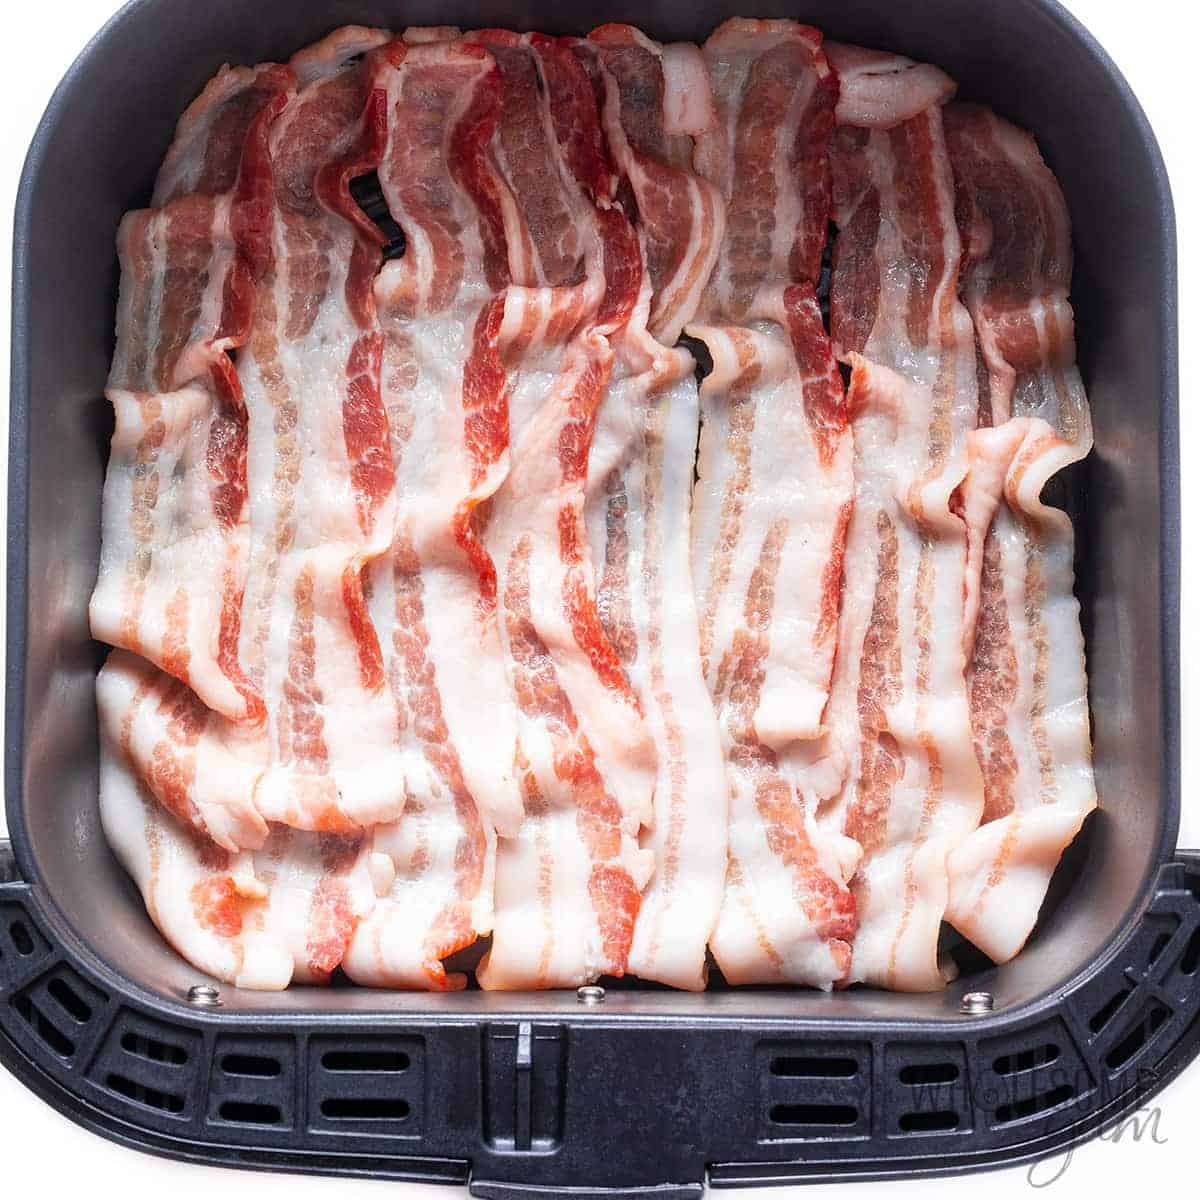 Raw bacon strips in air fryer